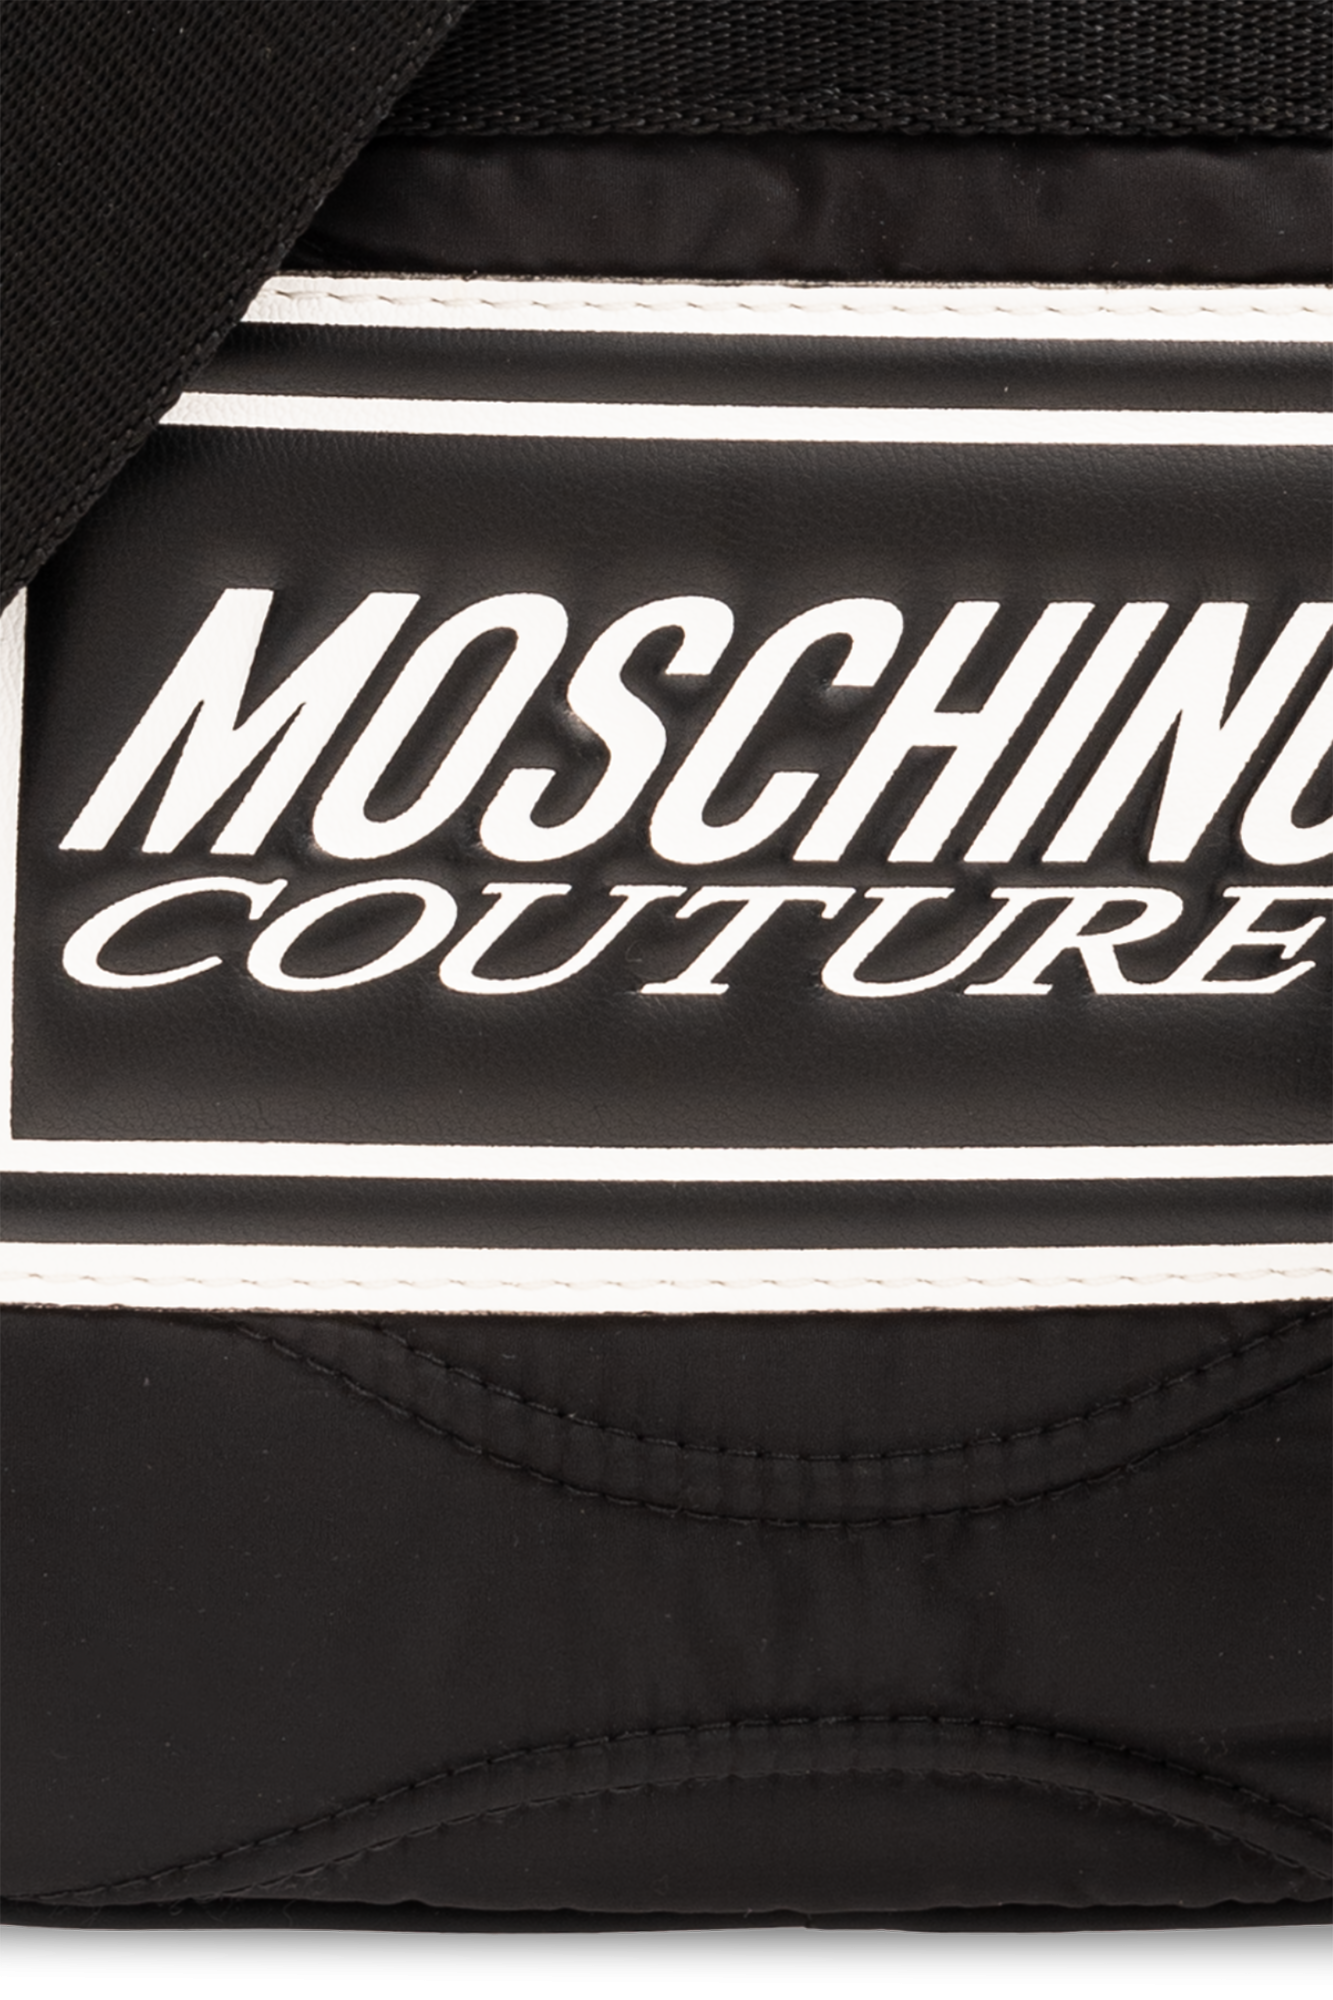 Moschino DIESEL 'NILLE-SH' SHOULDER BAG